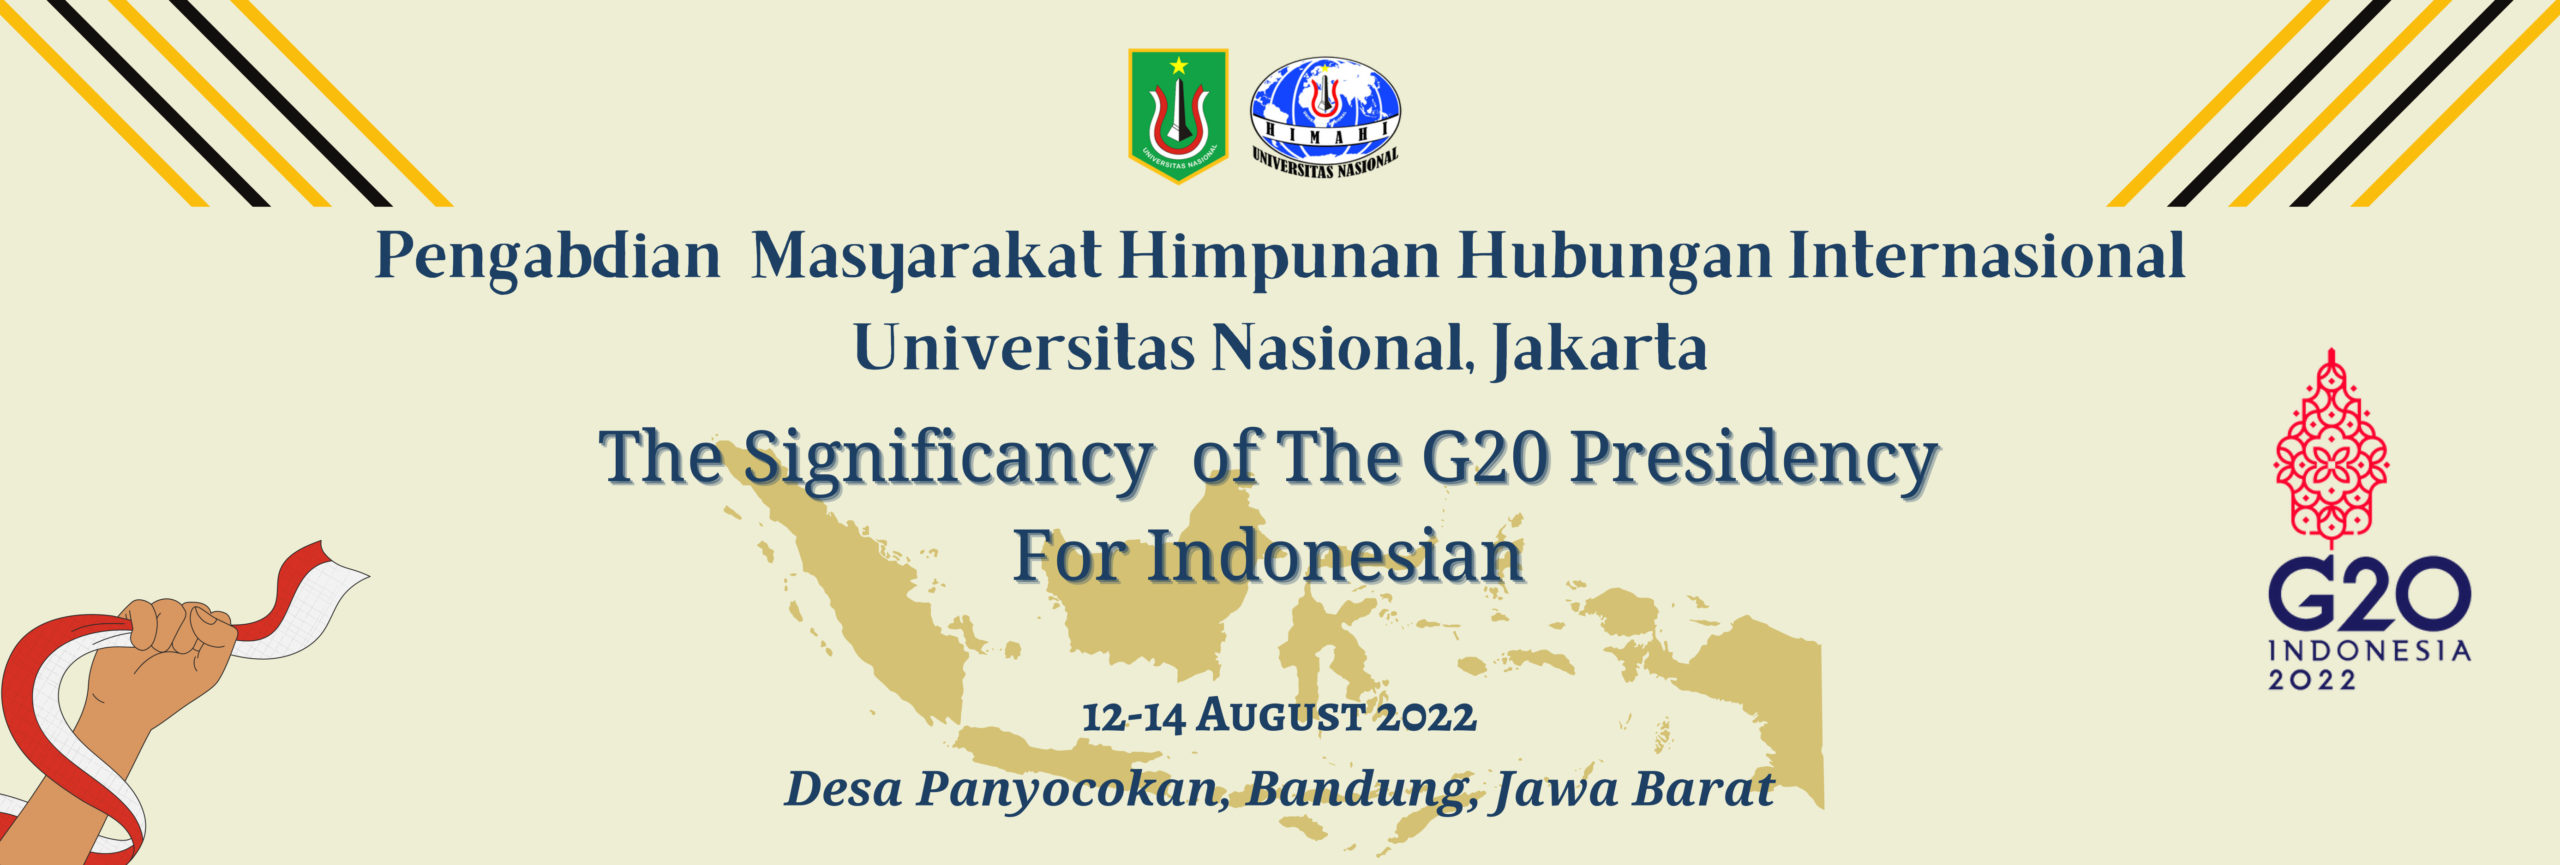 Pengabdian Masyarakat Himpunan Hubungan Internasional Universitas Nasional, Jakarta The Significancy of The G20 Presidency For Indonesian